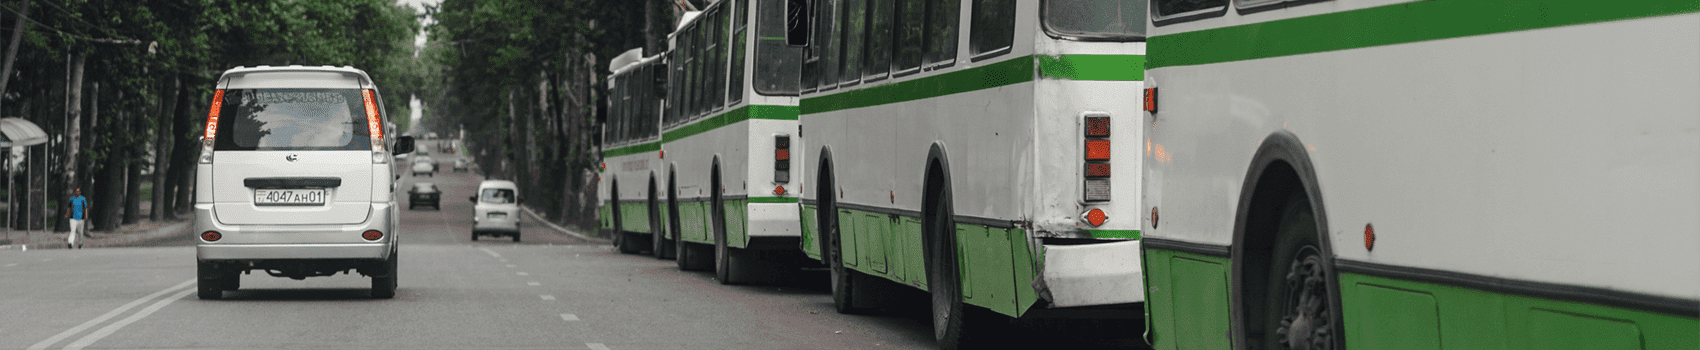 public transport management system in tajikistan